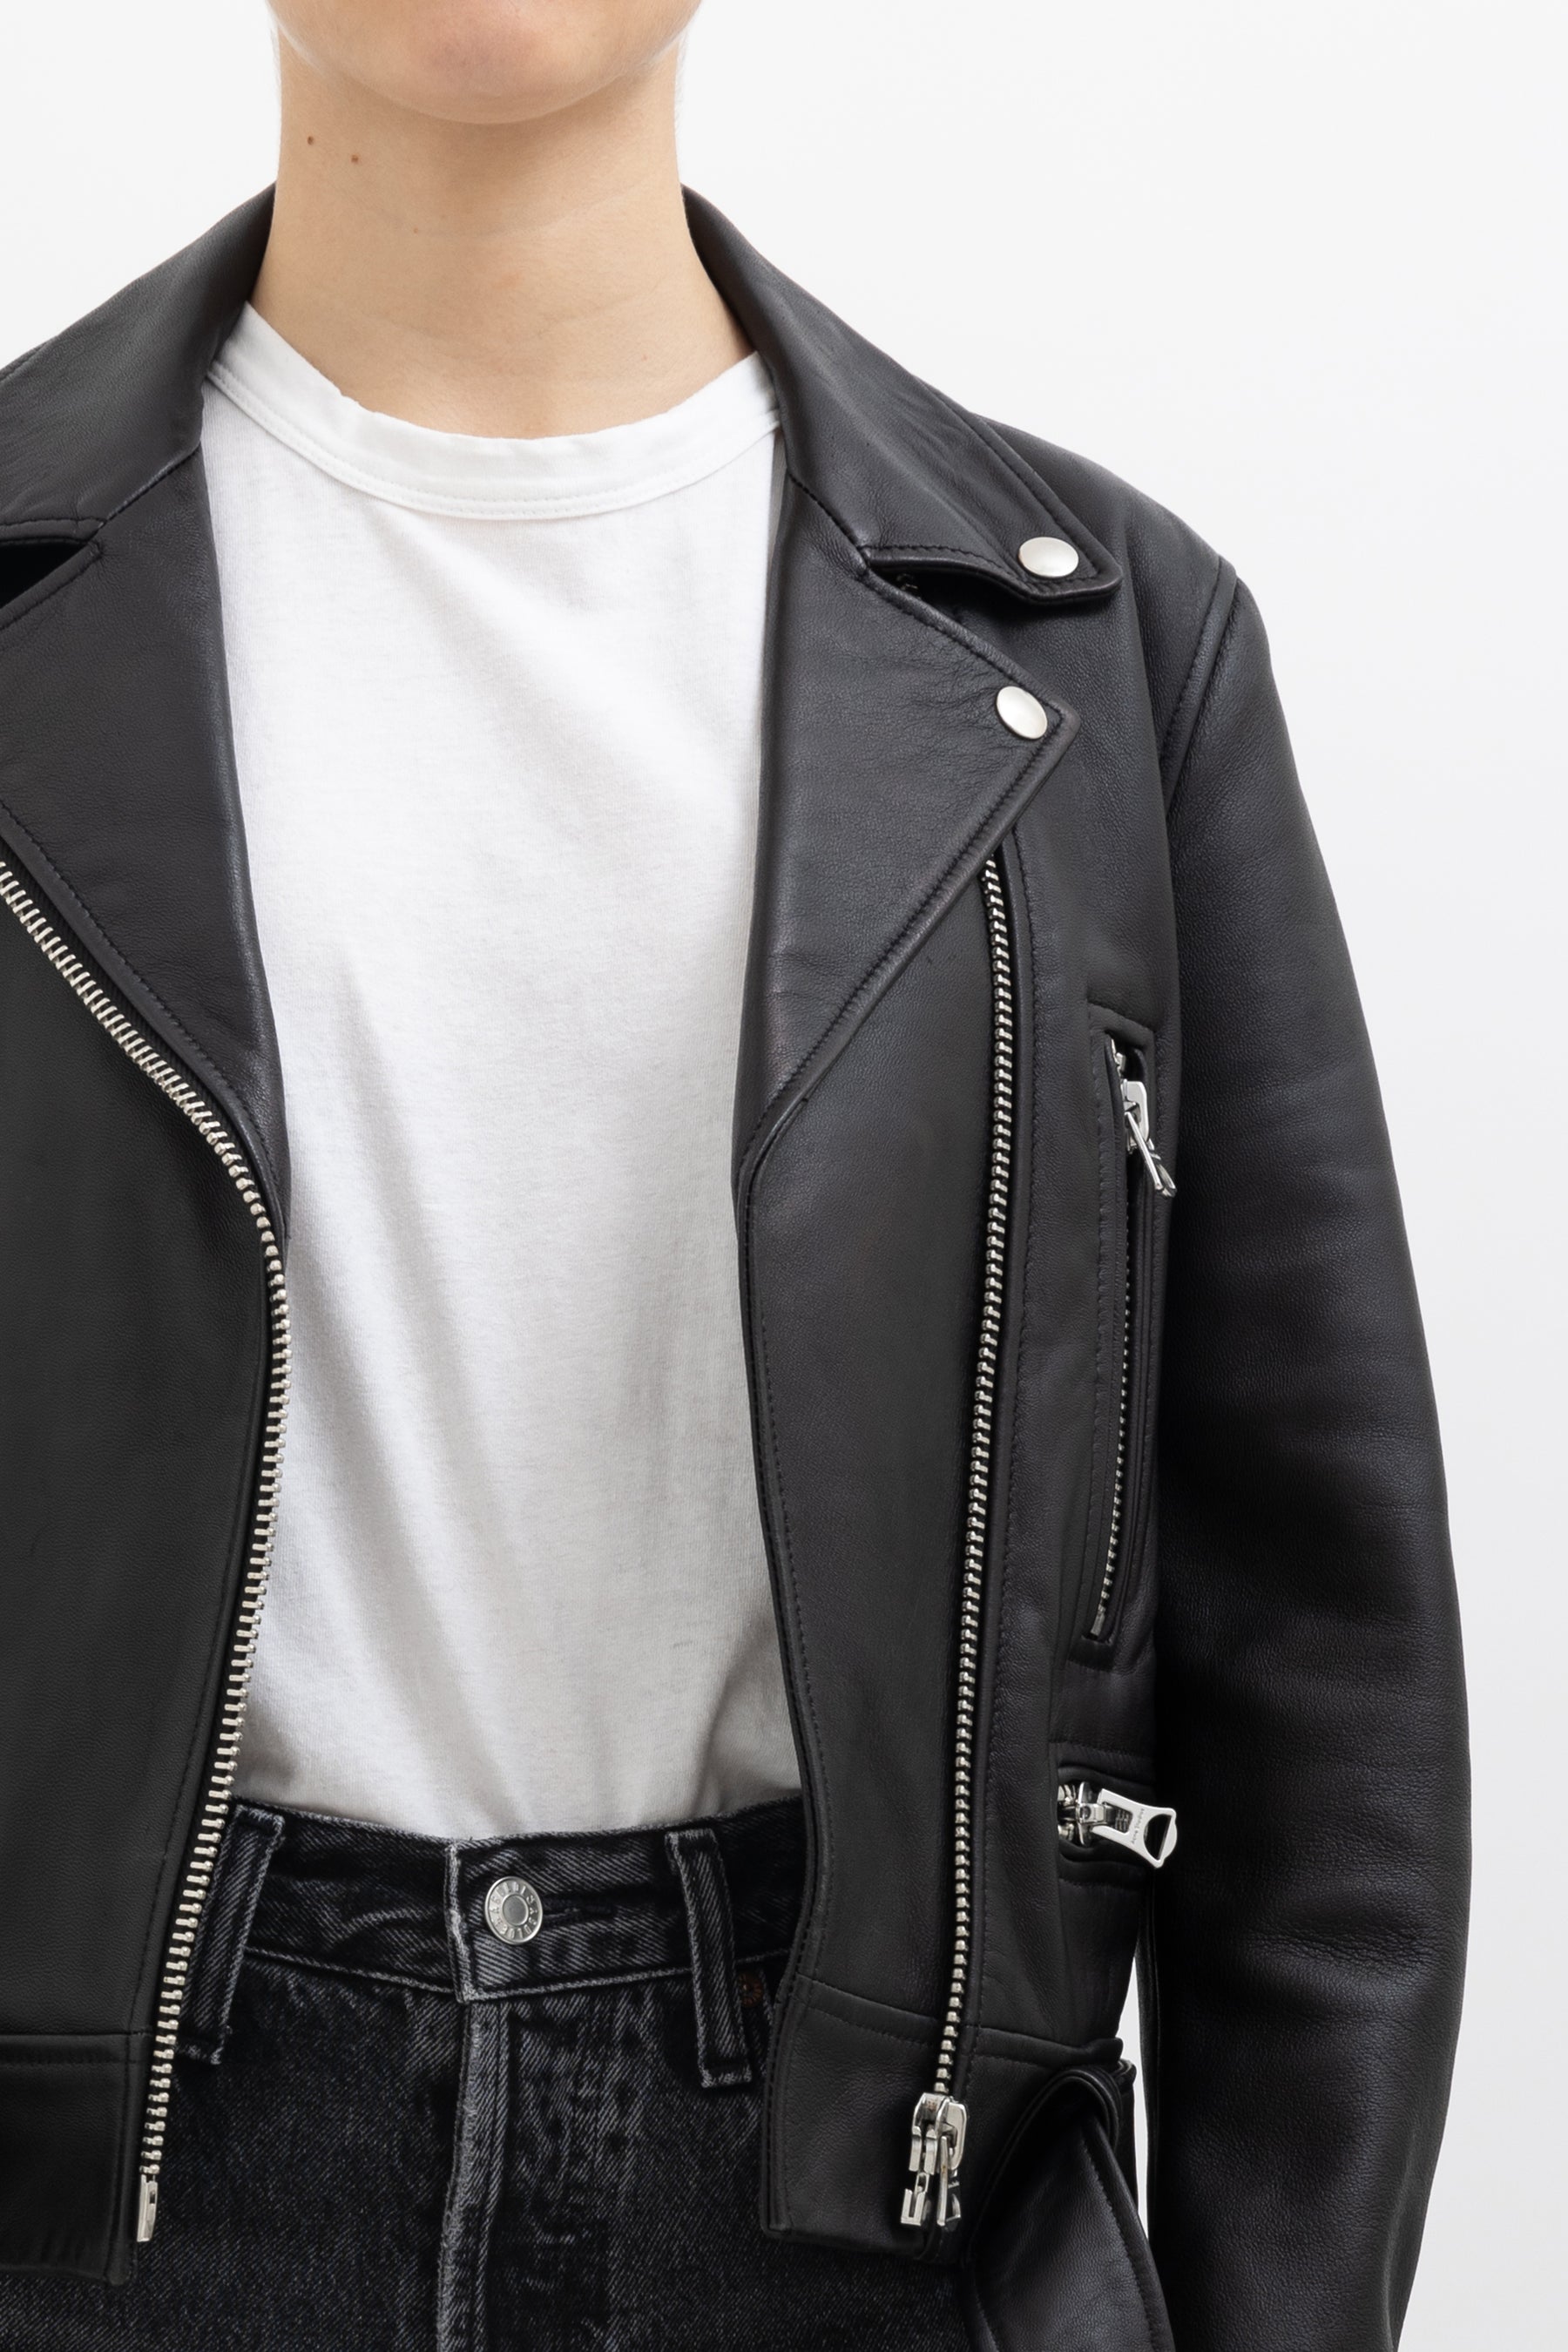 acne-studios-black-leather-biker-jacket-36-2bbe